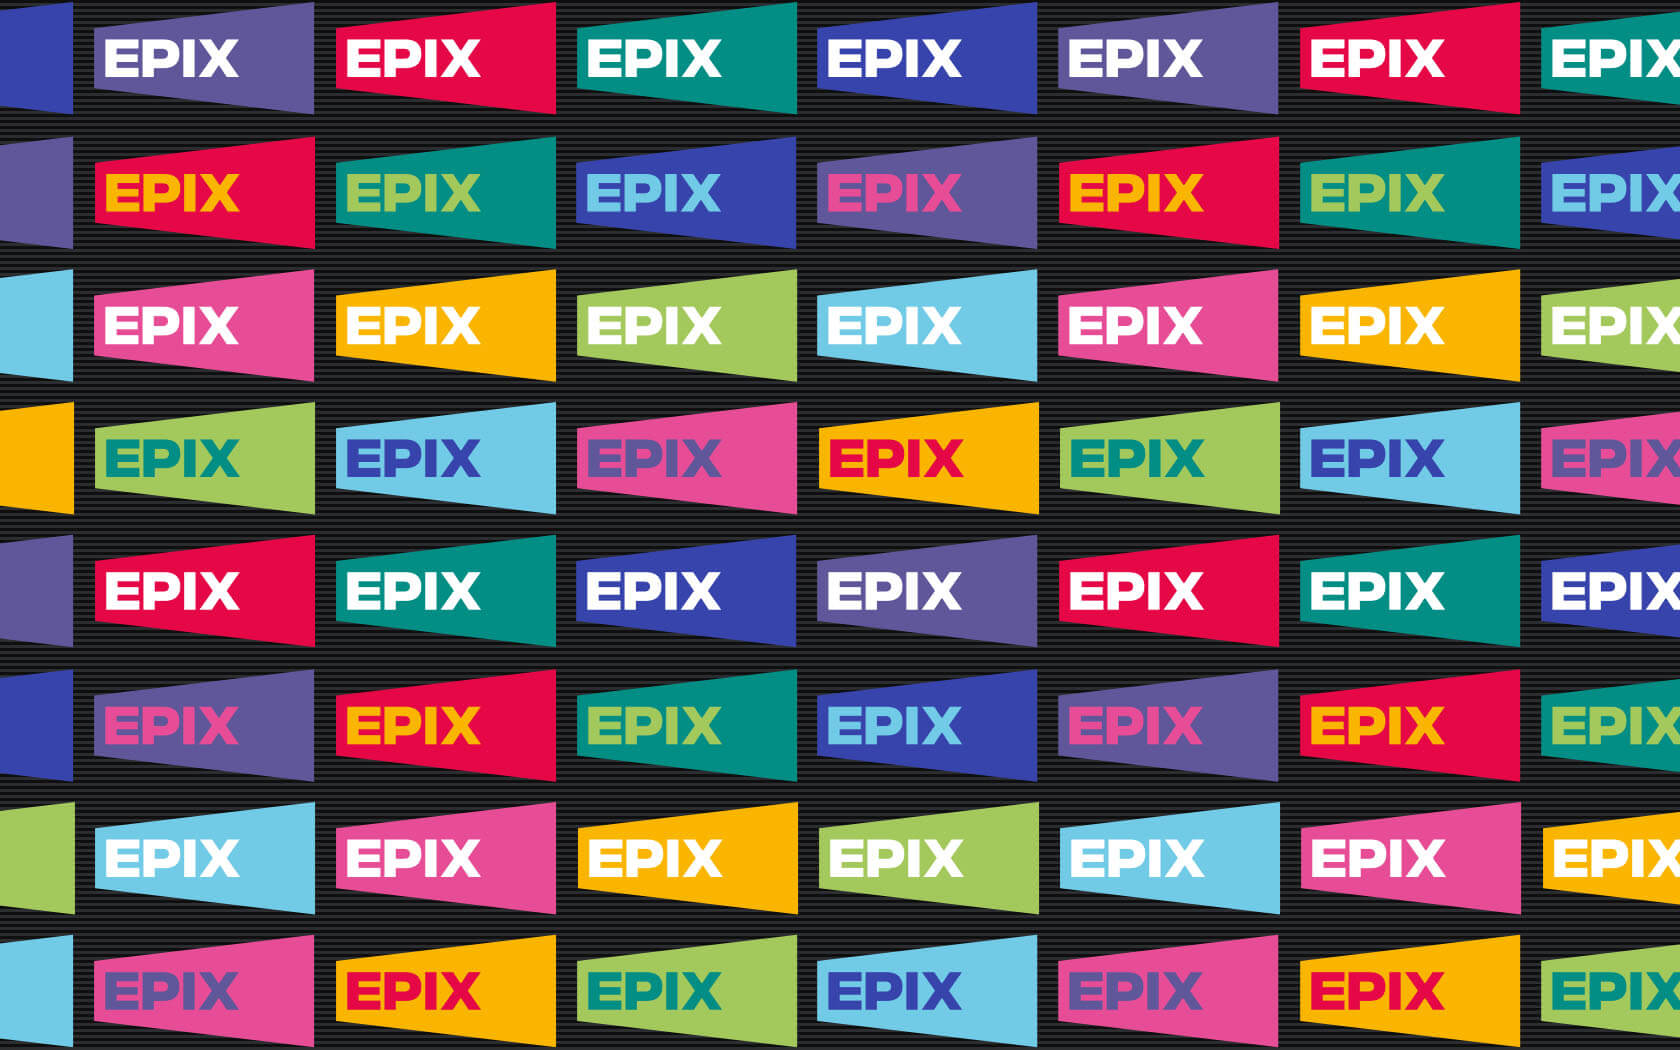 Epix logo in variations